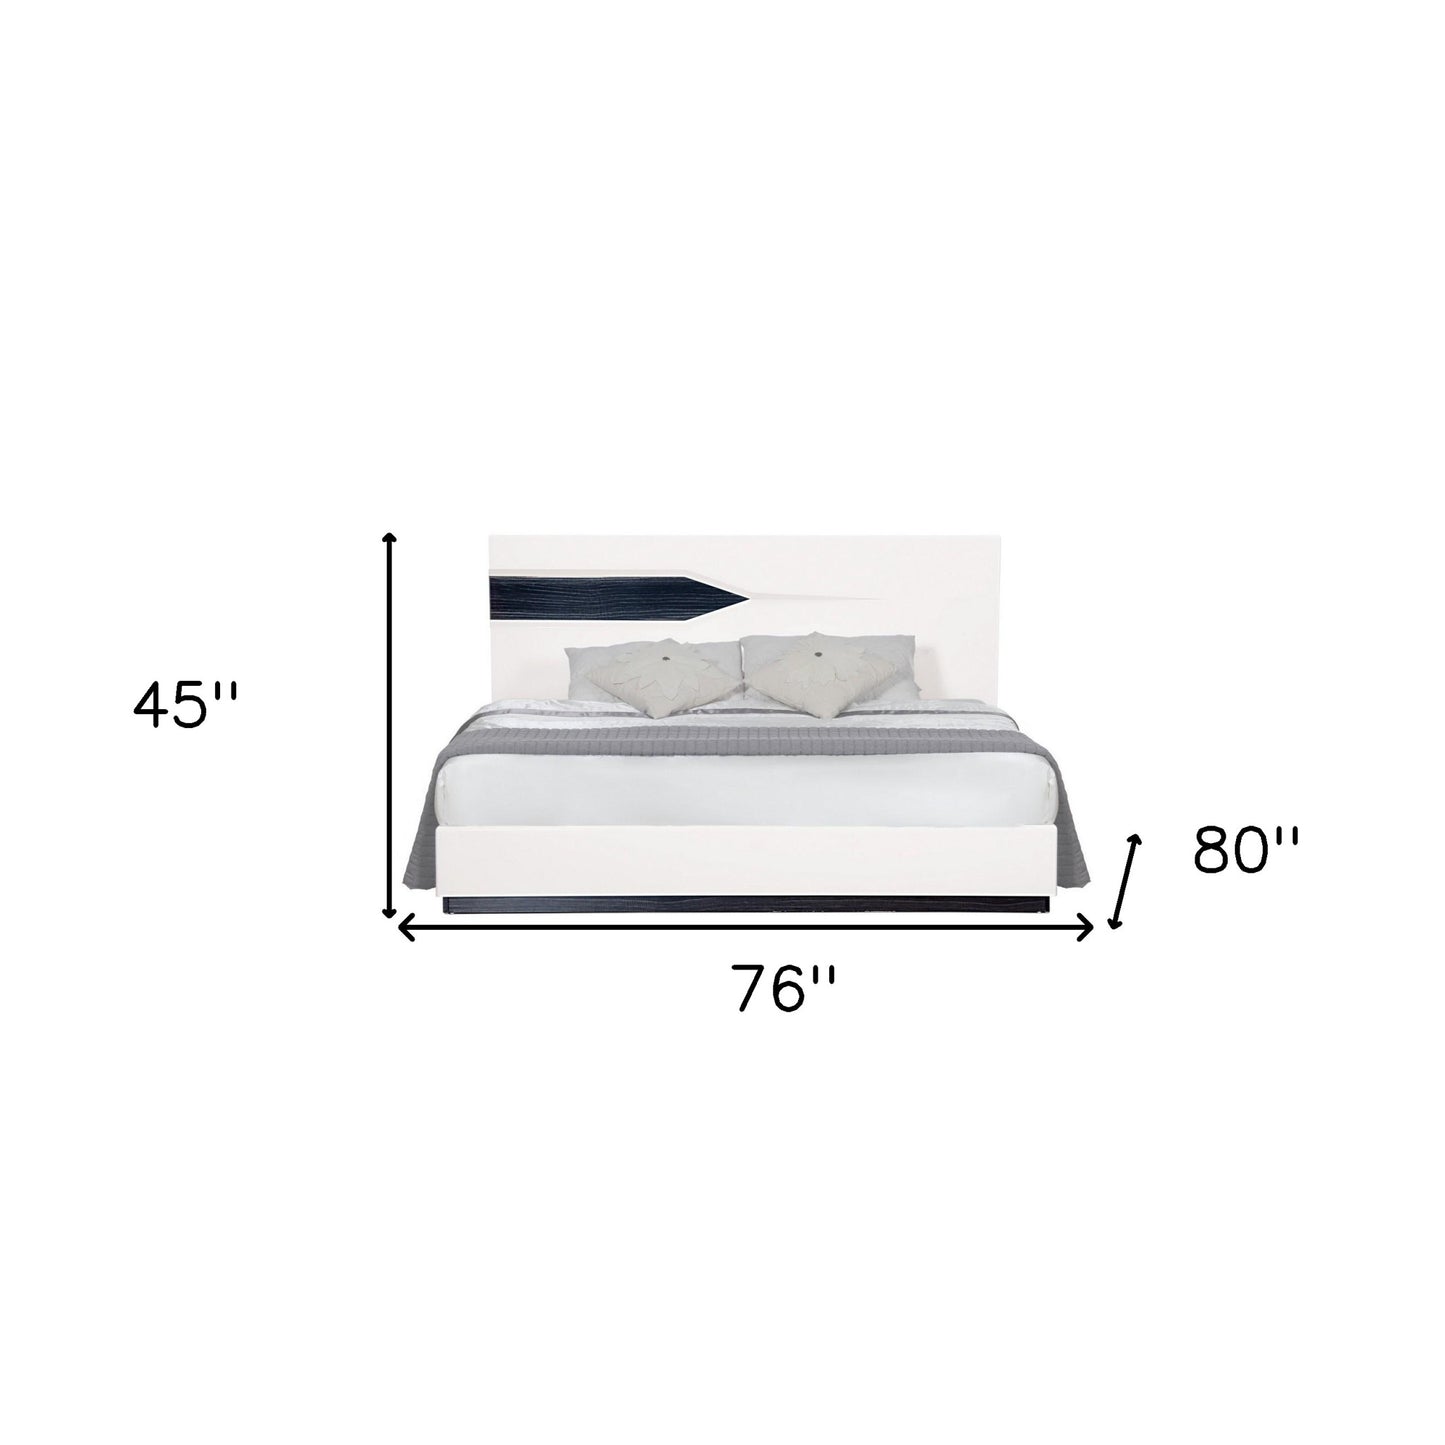 White Tone Quekingen Bed With Dark Grey Zebrano Details On Headboard And Bottom Rail Accent